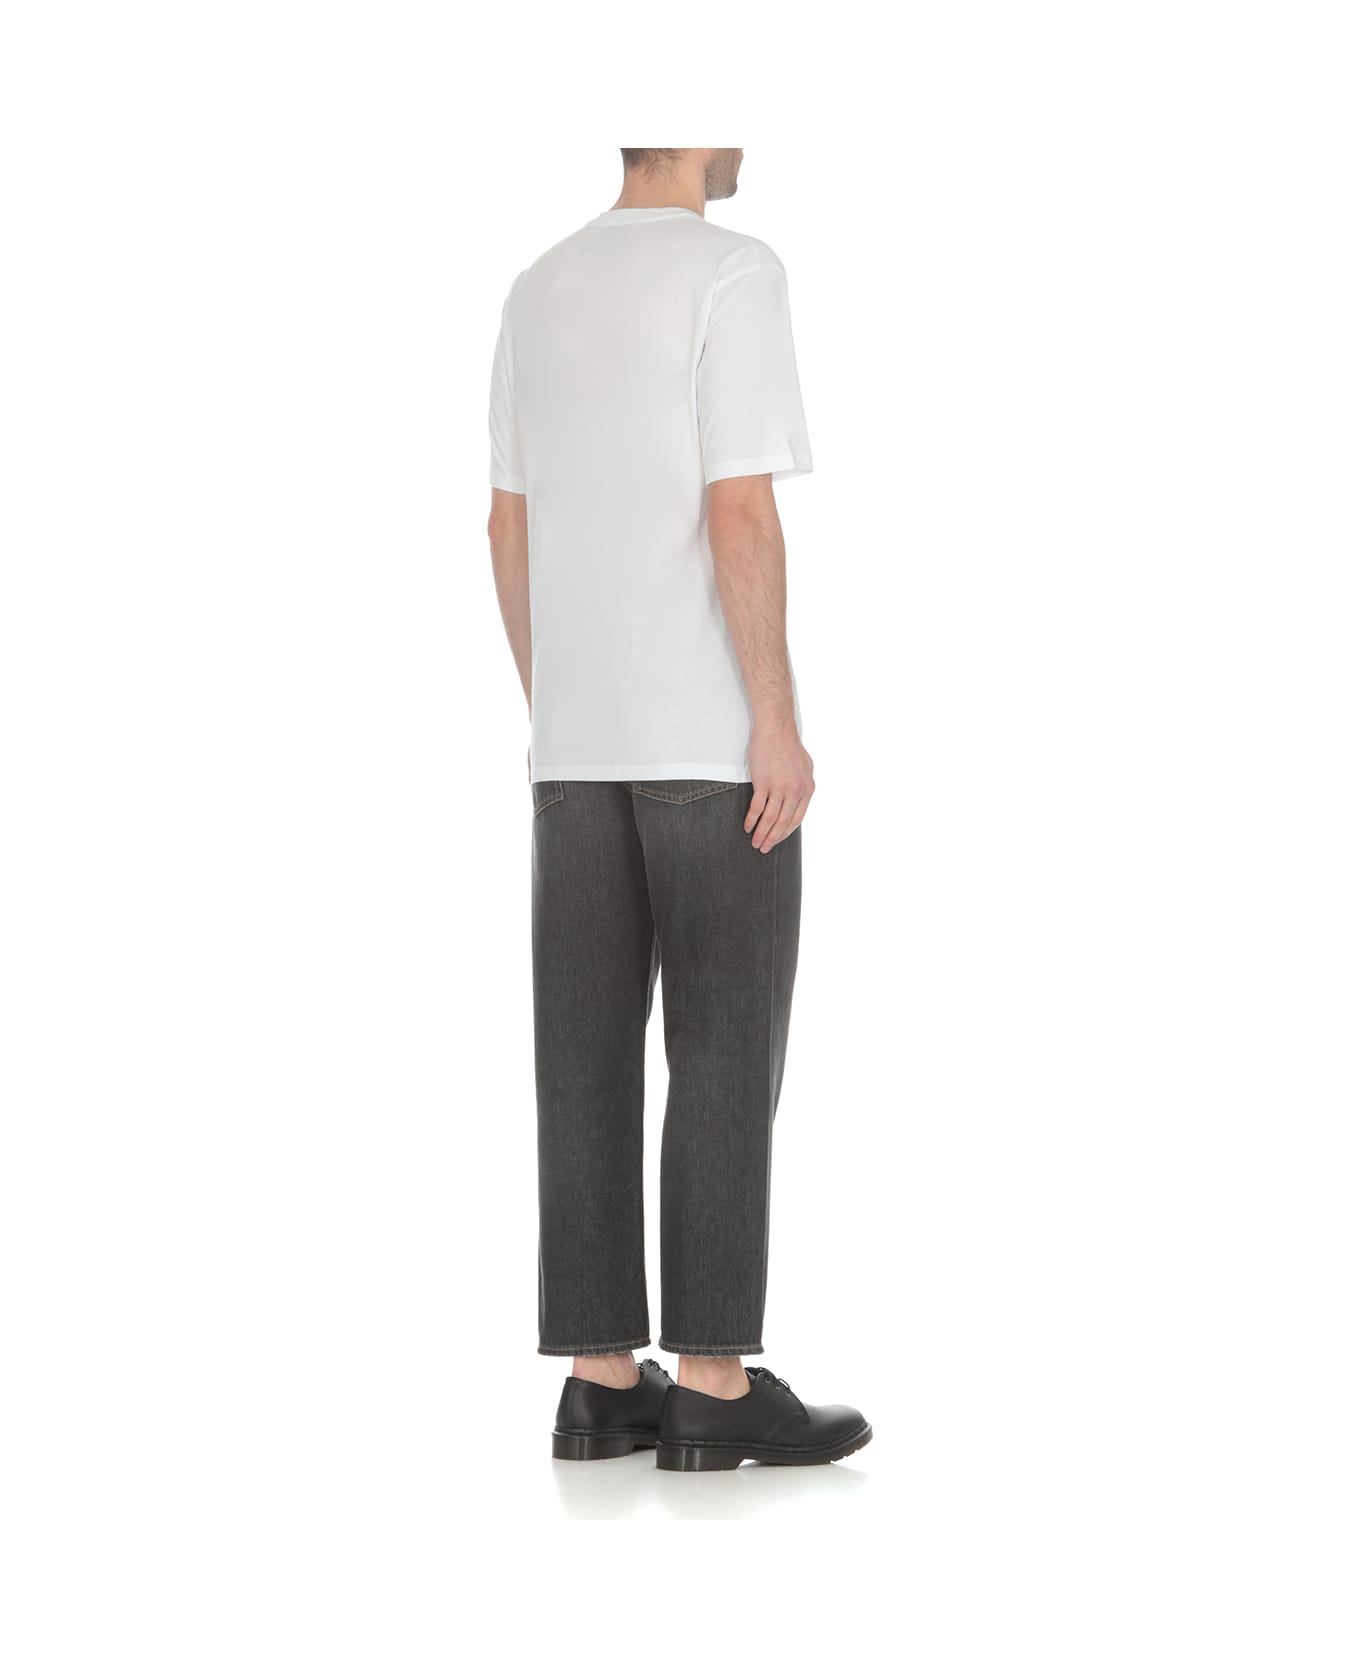 Moschino Cotton T-shirt - White シャツ